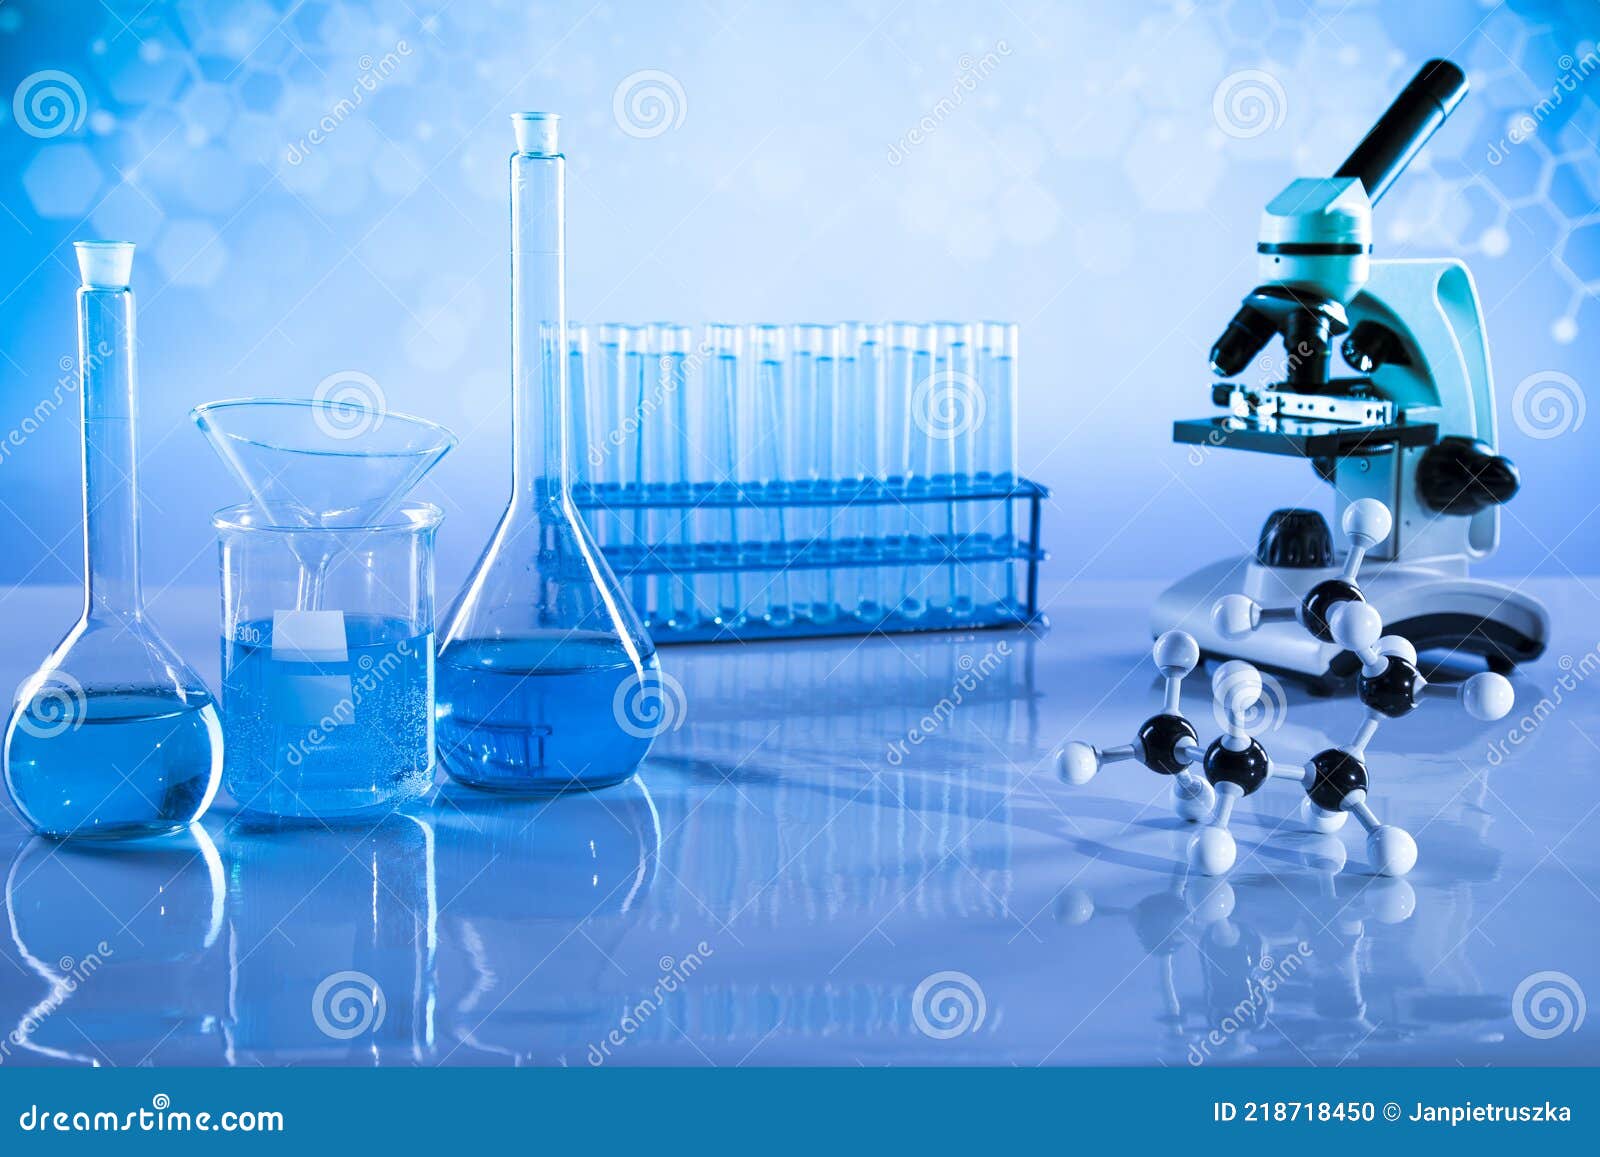 microscope, laboratory beakers,science experiment